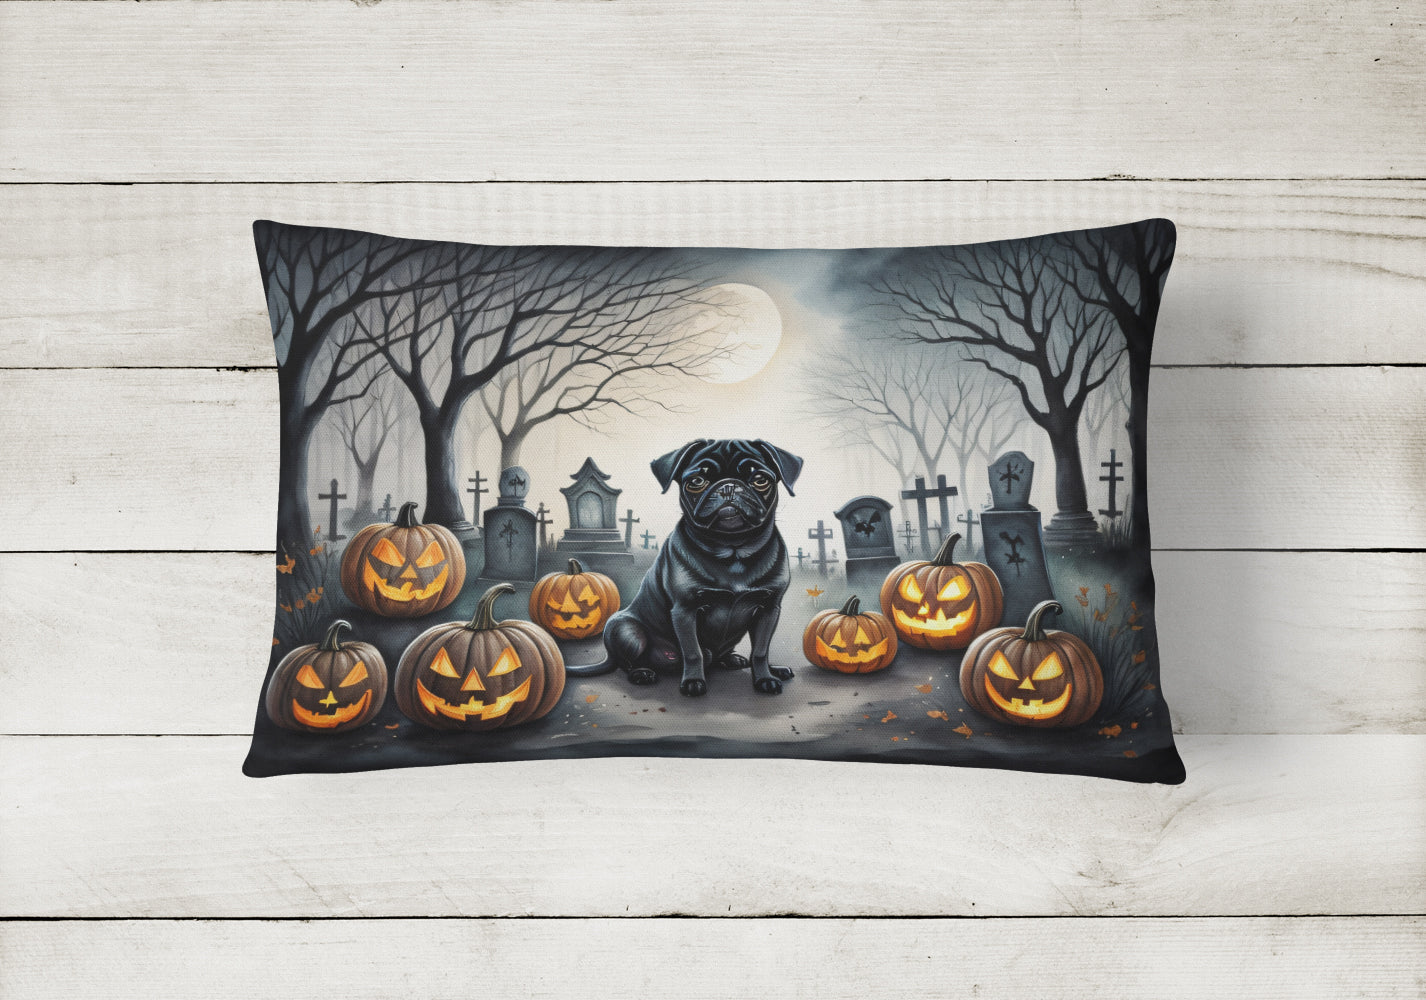 Black Pug Spooky Halloween Fabric Decorative Pillow